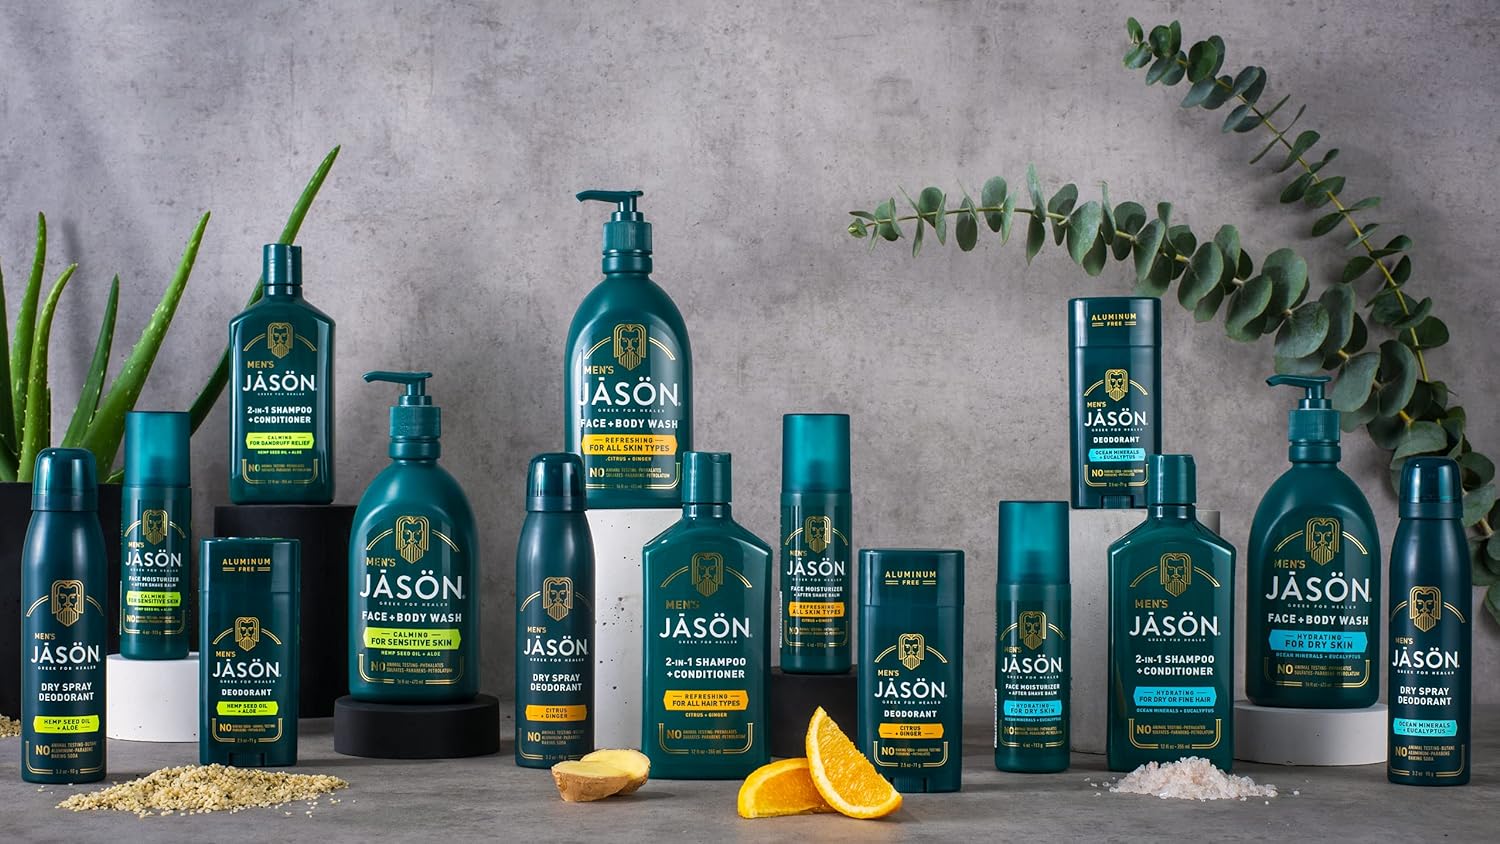 Jason Citrus and Ginger Dry Spray Deodorant 3.2 oz Aerosol : Beauty & Personal Care